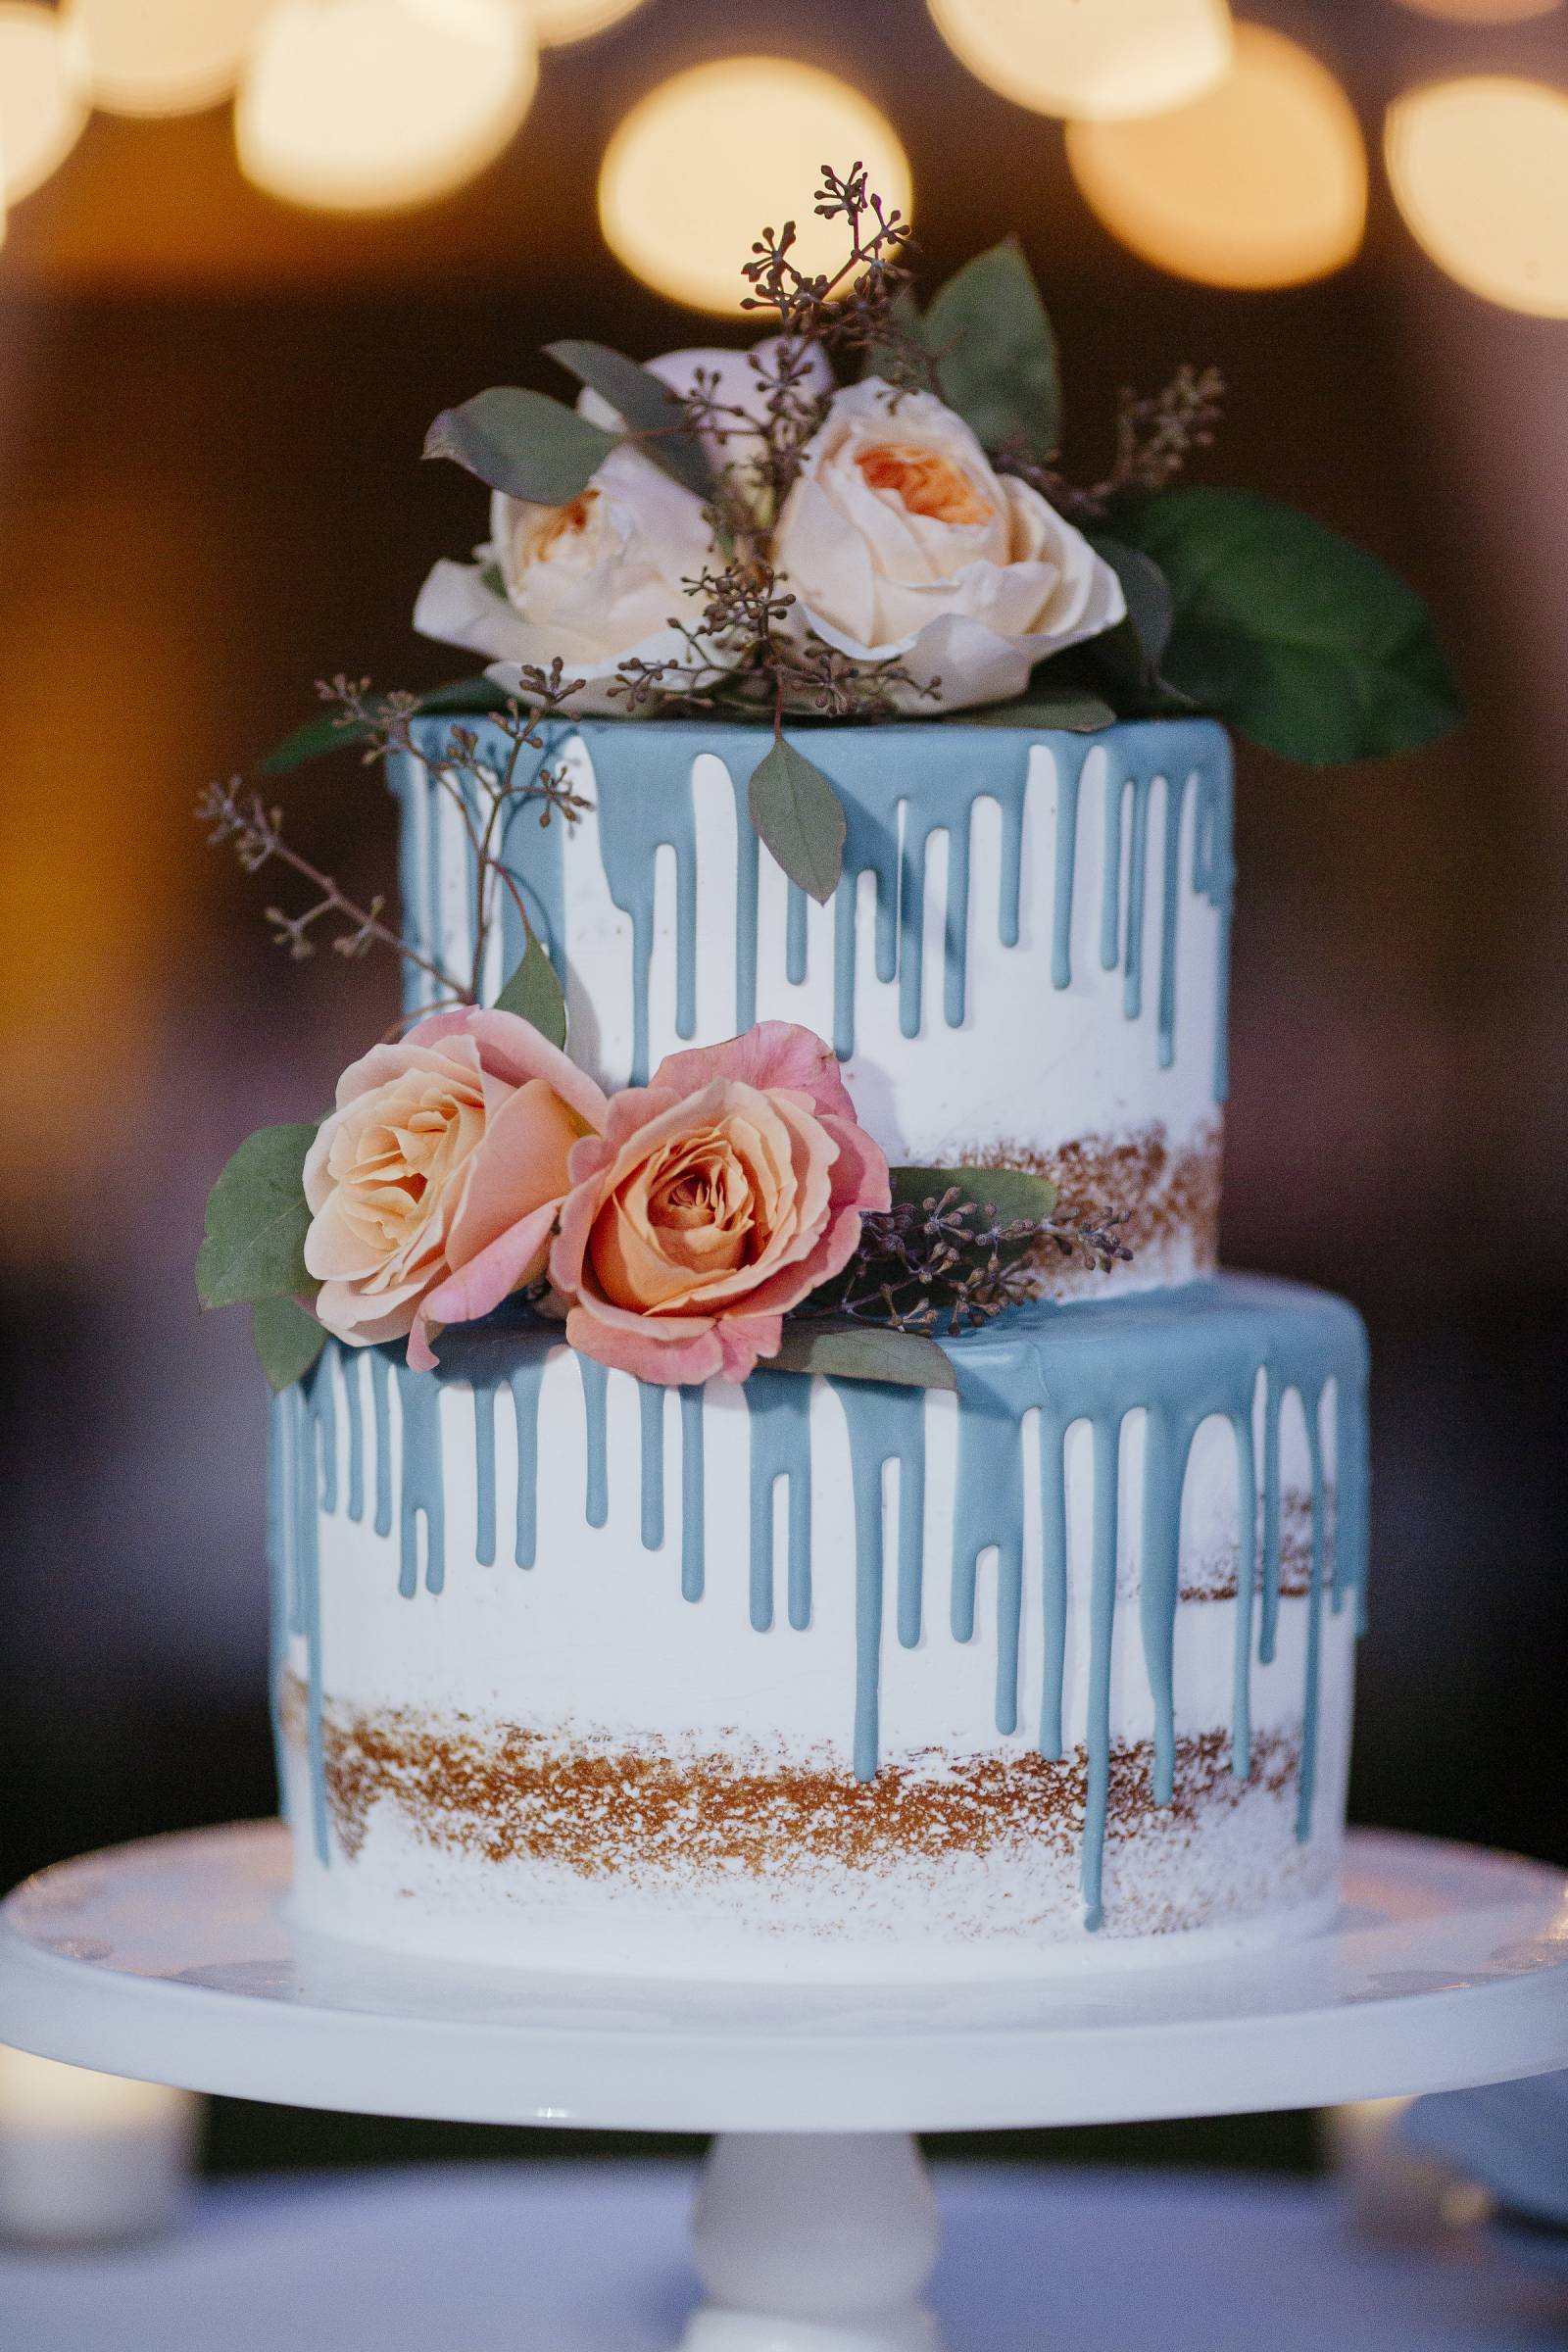 blue wedding cake